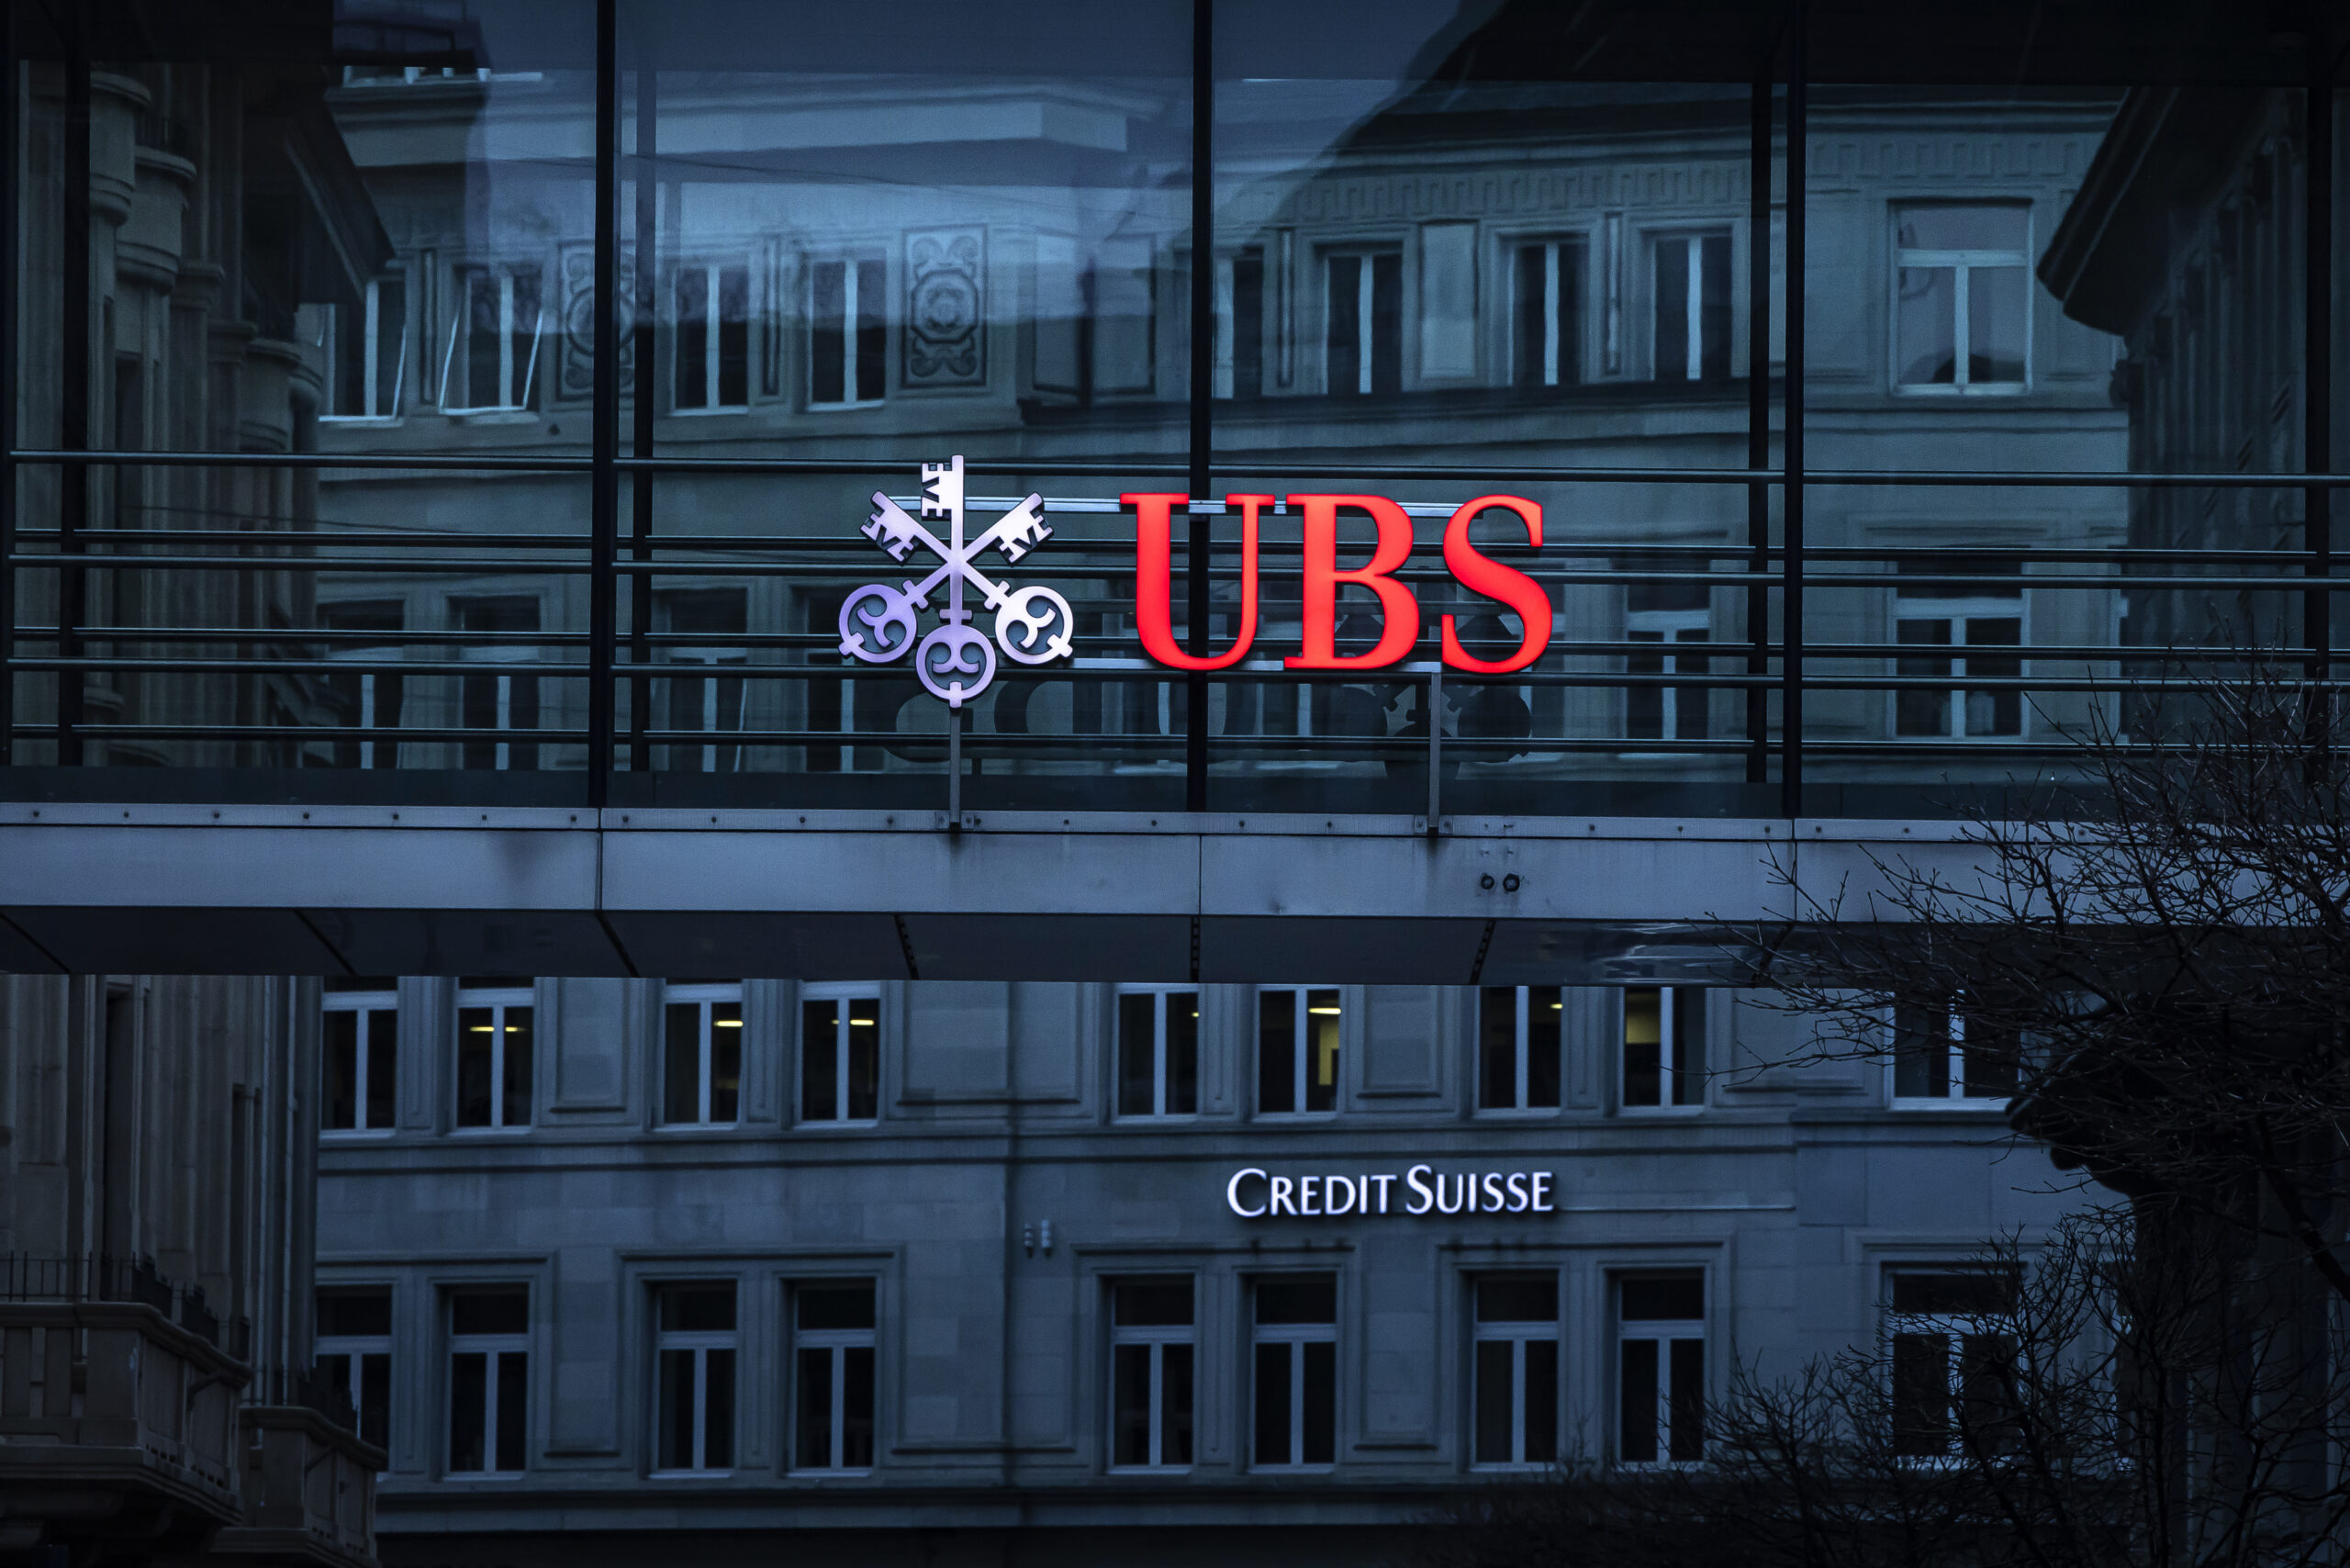 UBS Credit Suisse